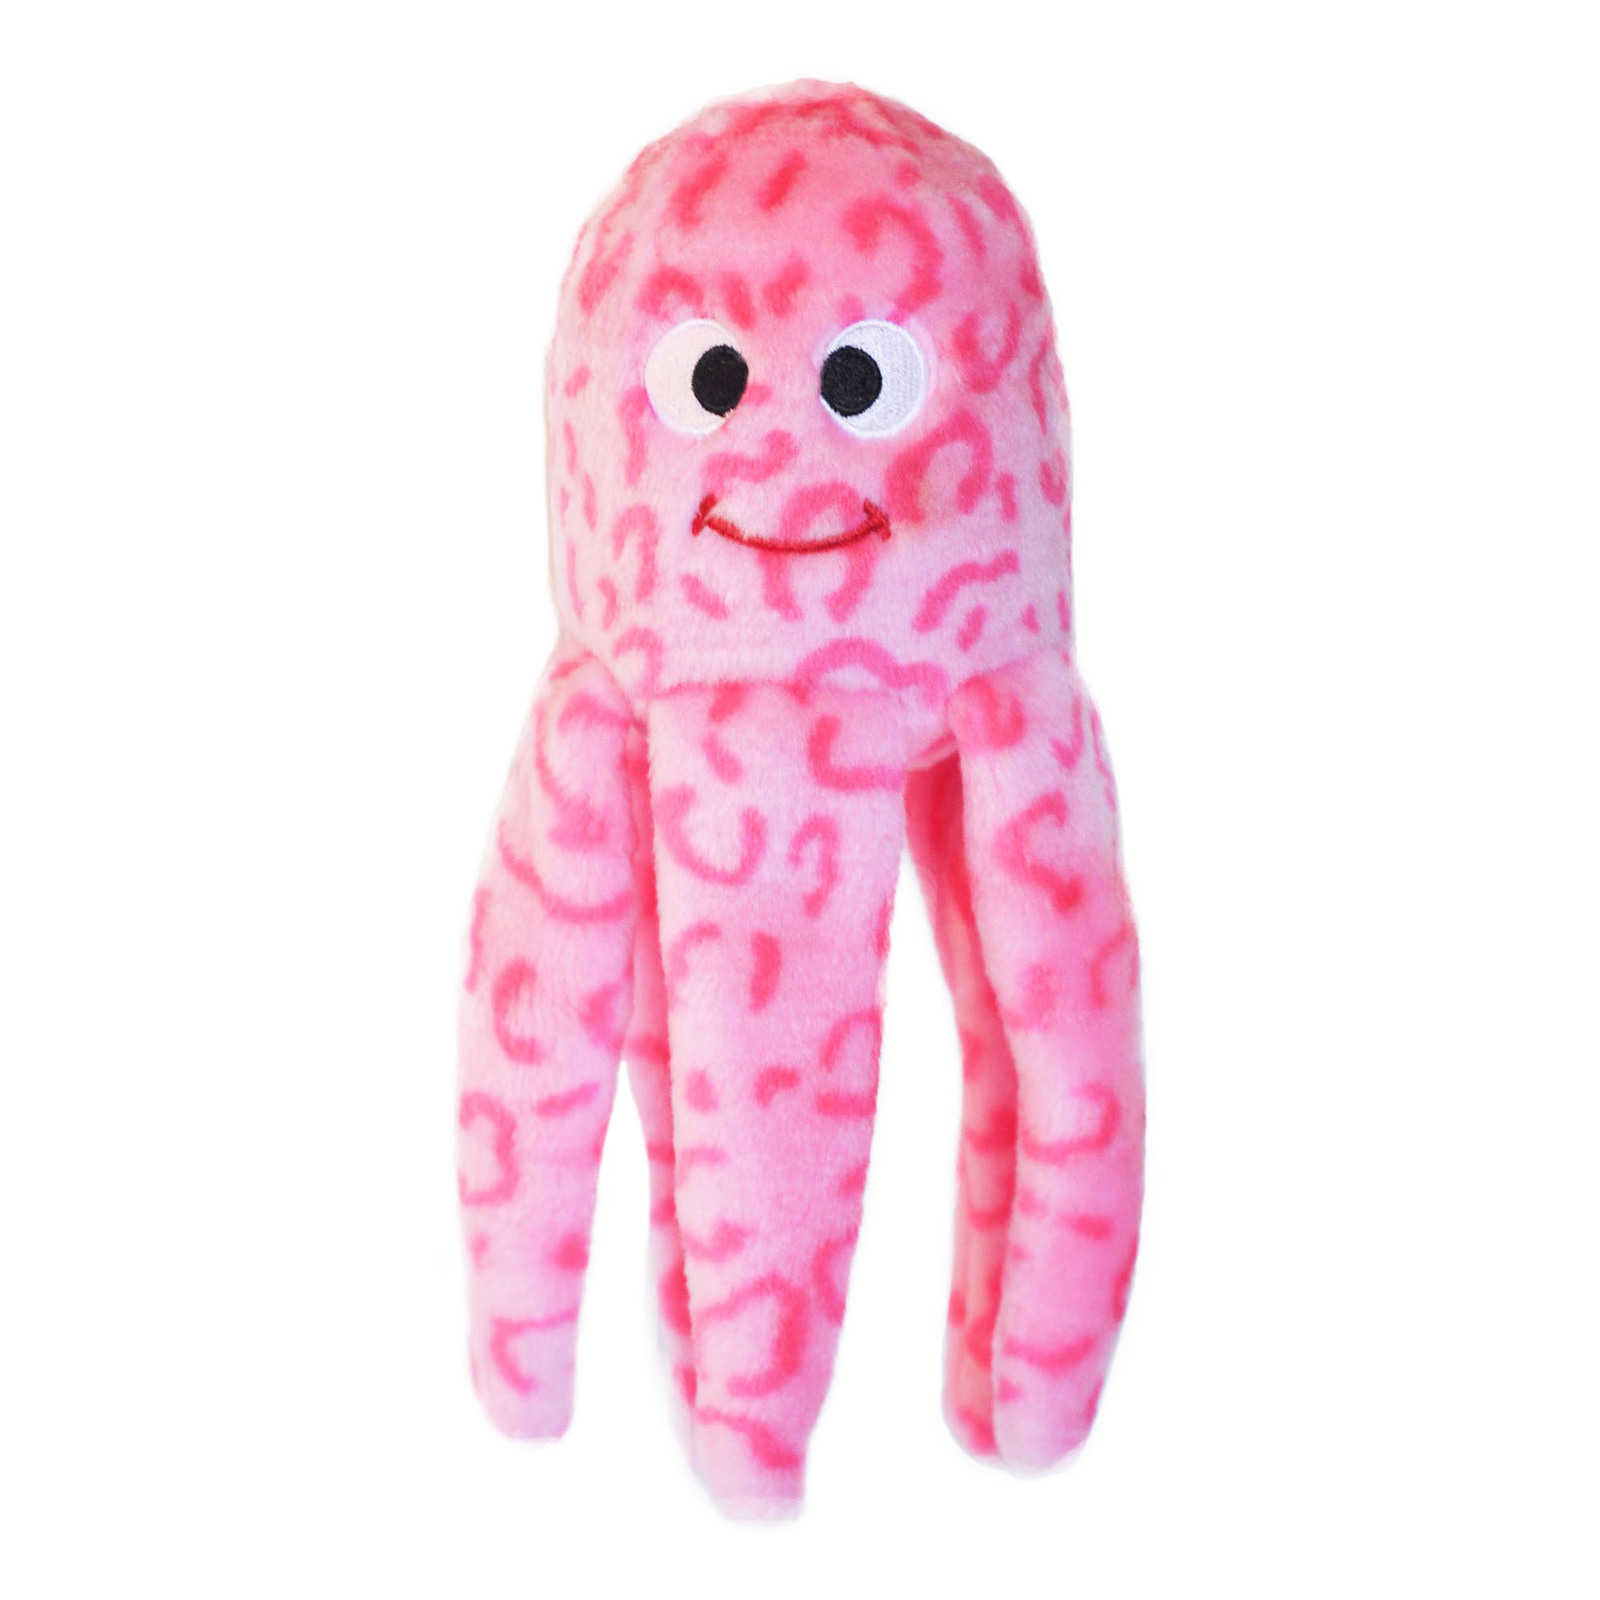 Zippy Paws Floppy Jelly Pink Octopus Squeaker Plush Dog Toy image 0